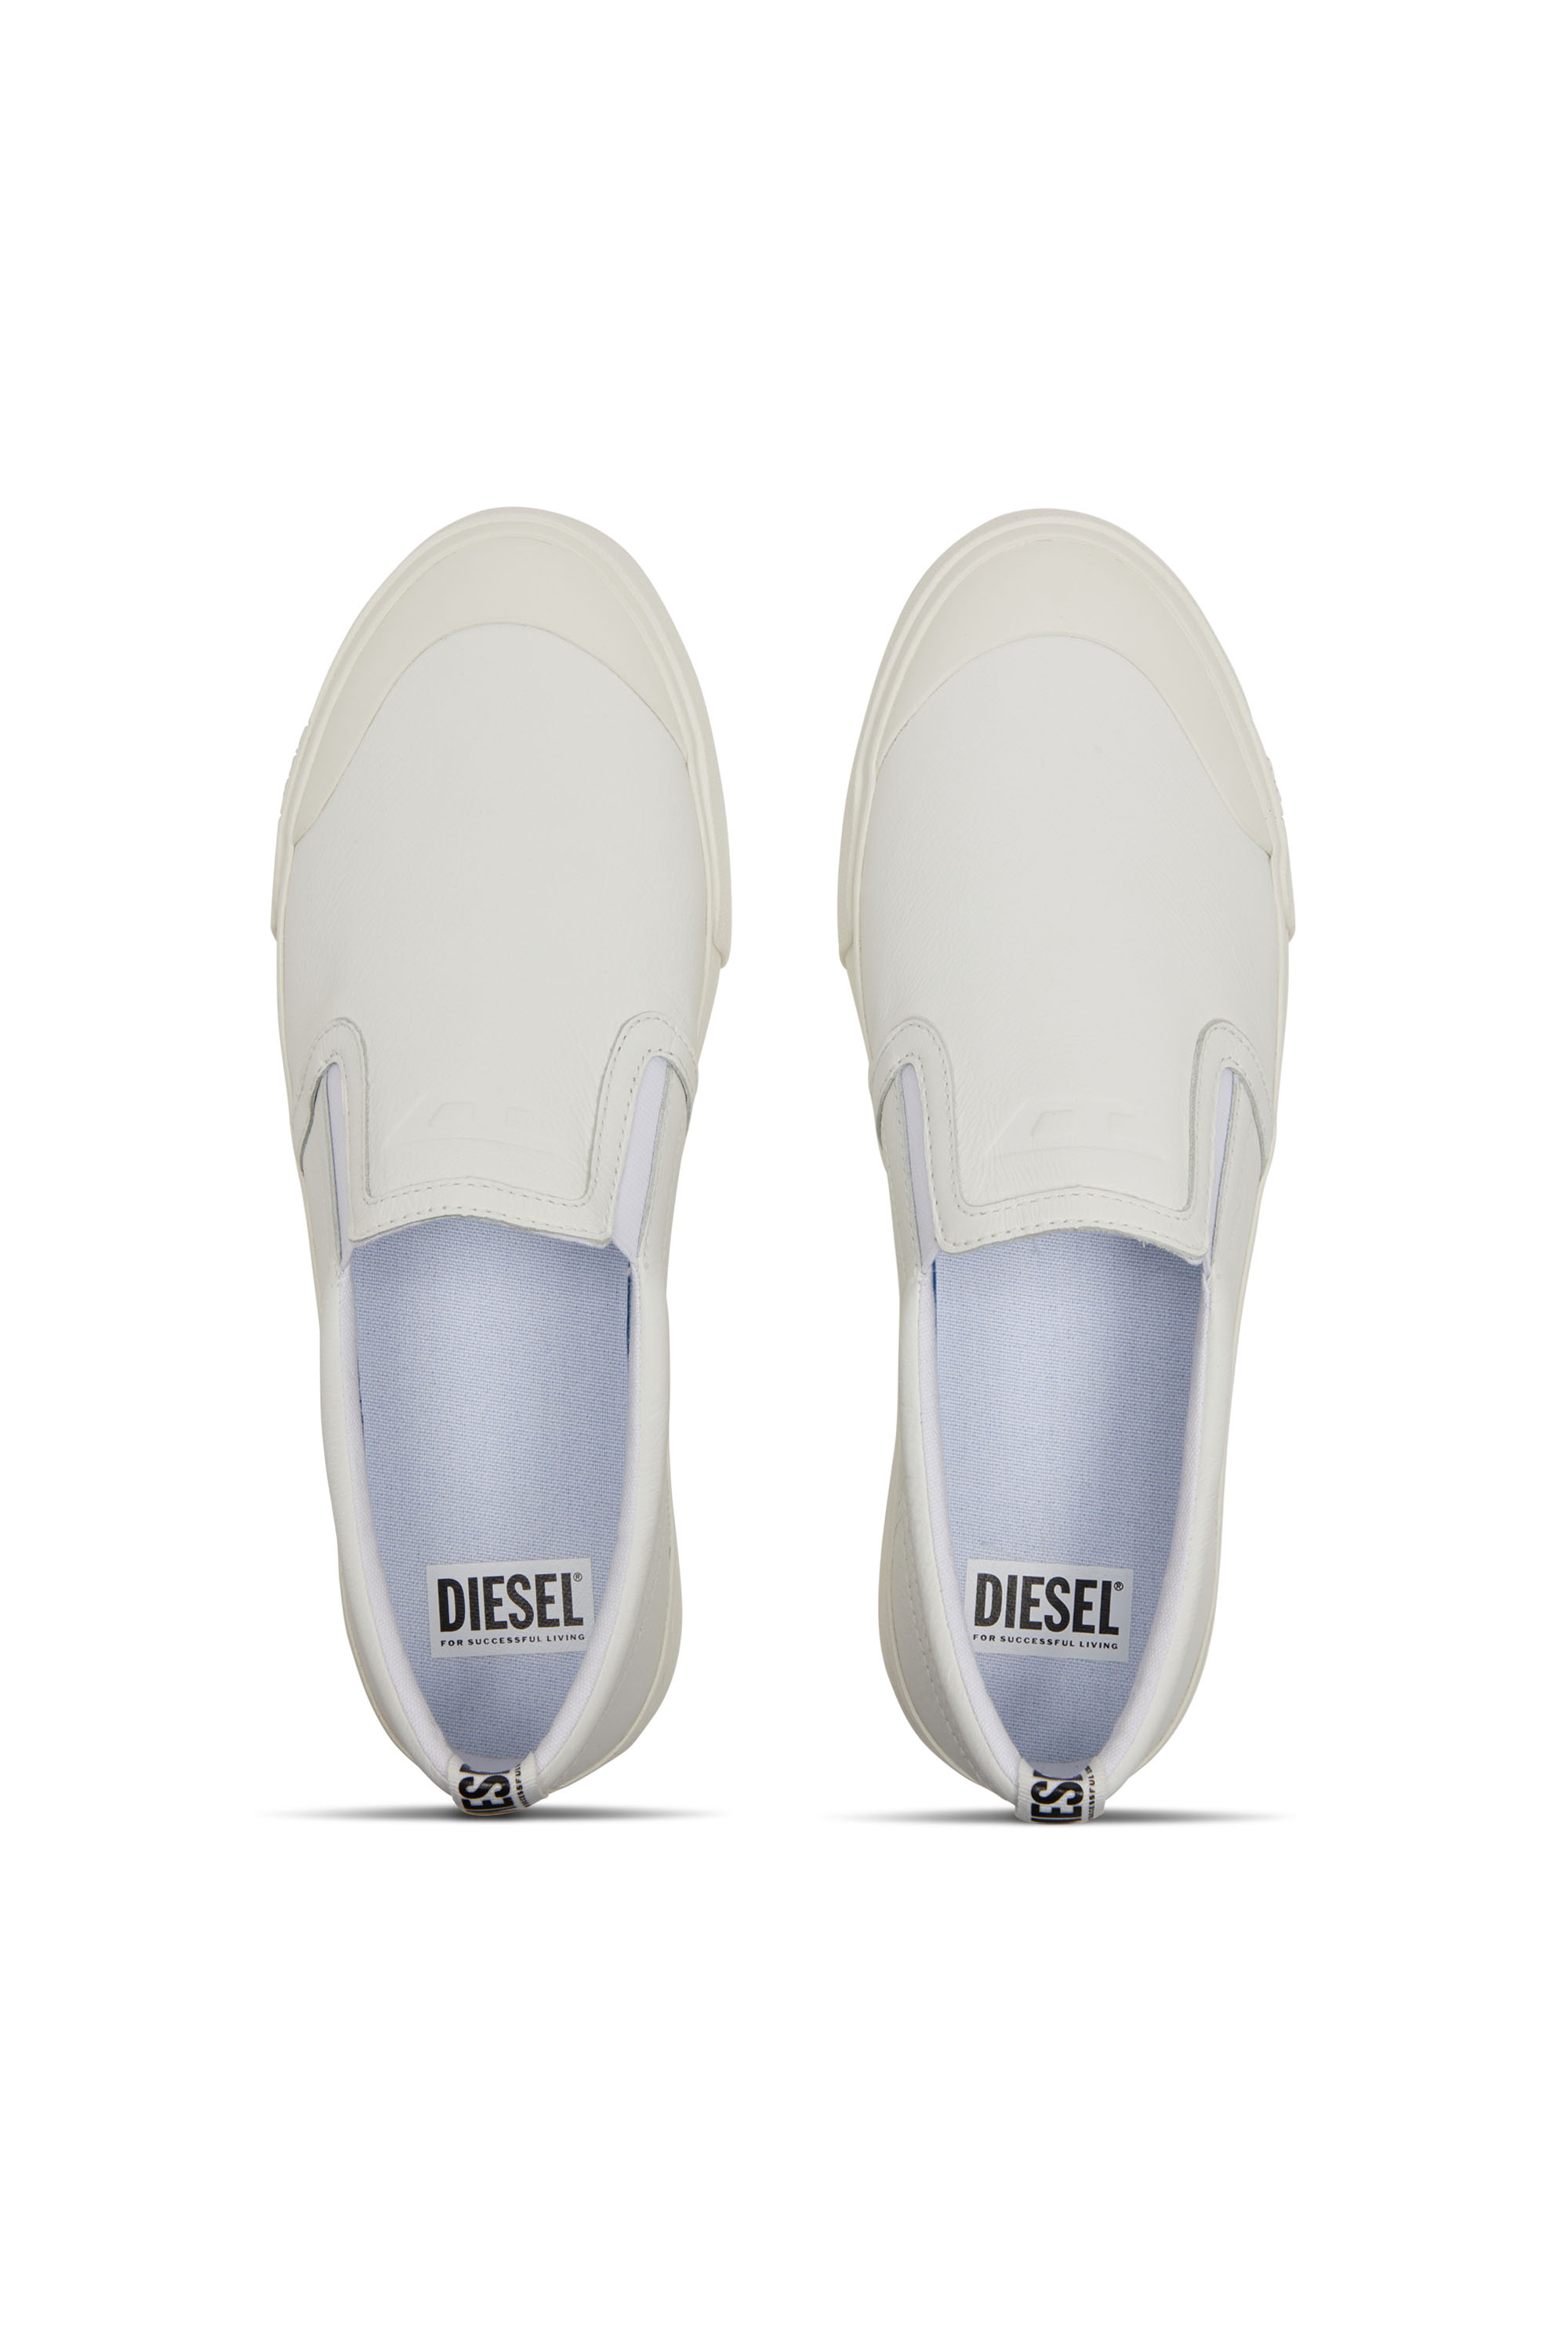 Diesel - S-ATHOS SLIP ON, Male S-Athos-Slip-on sneakers in plain leather in ホワイト - Image 5